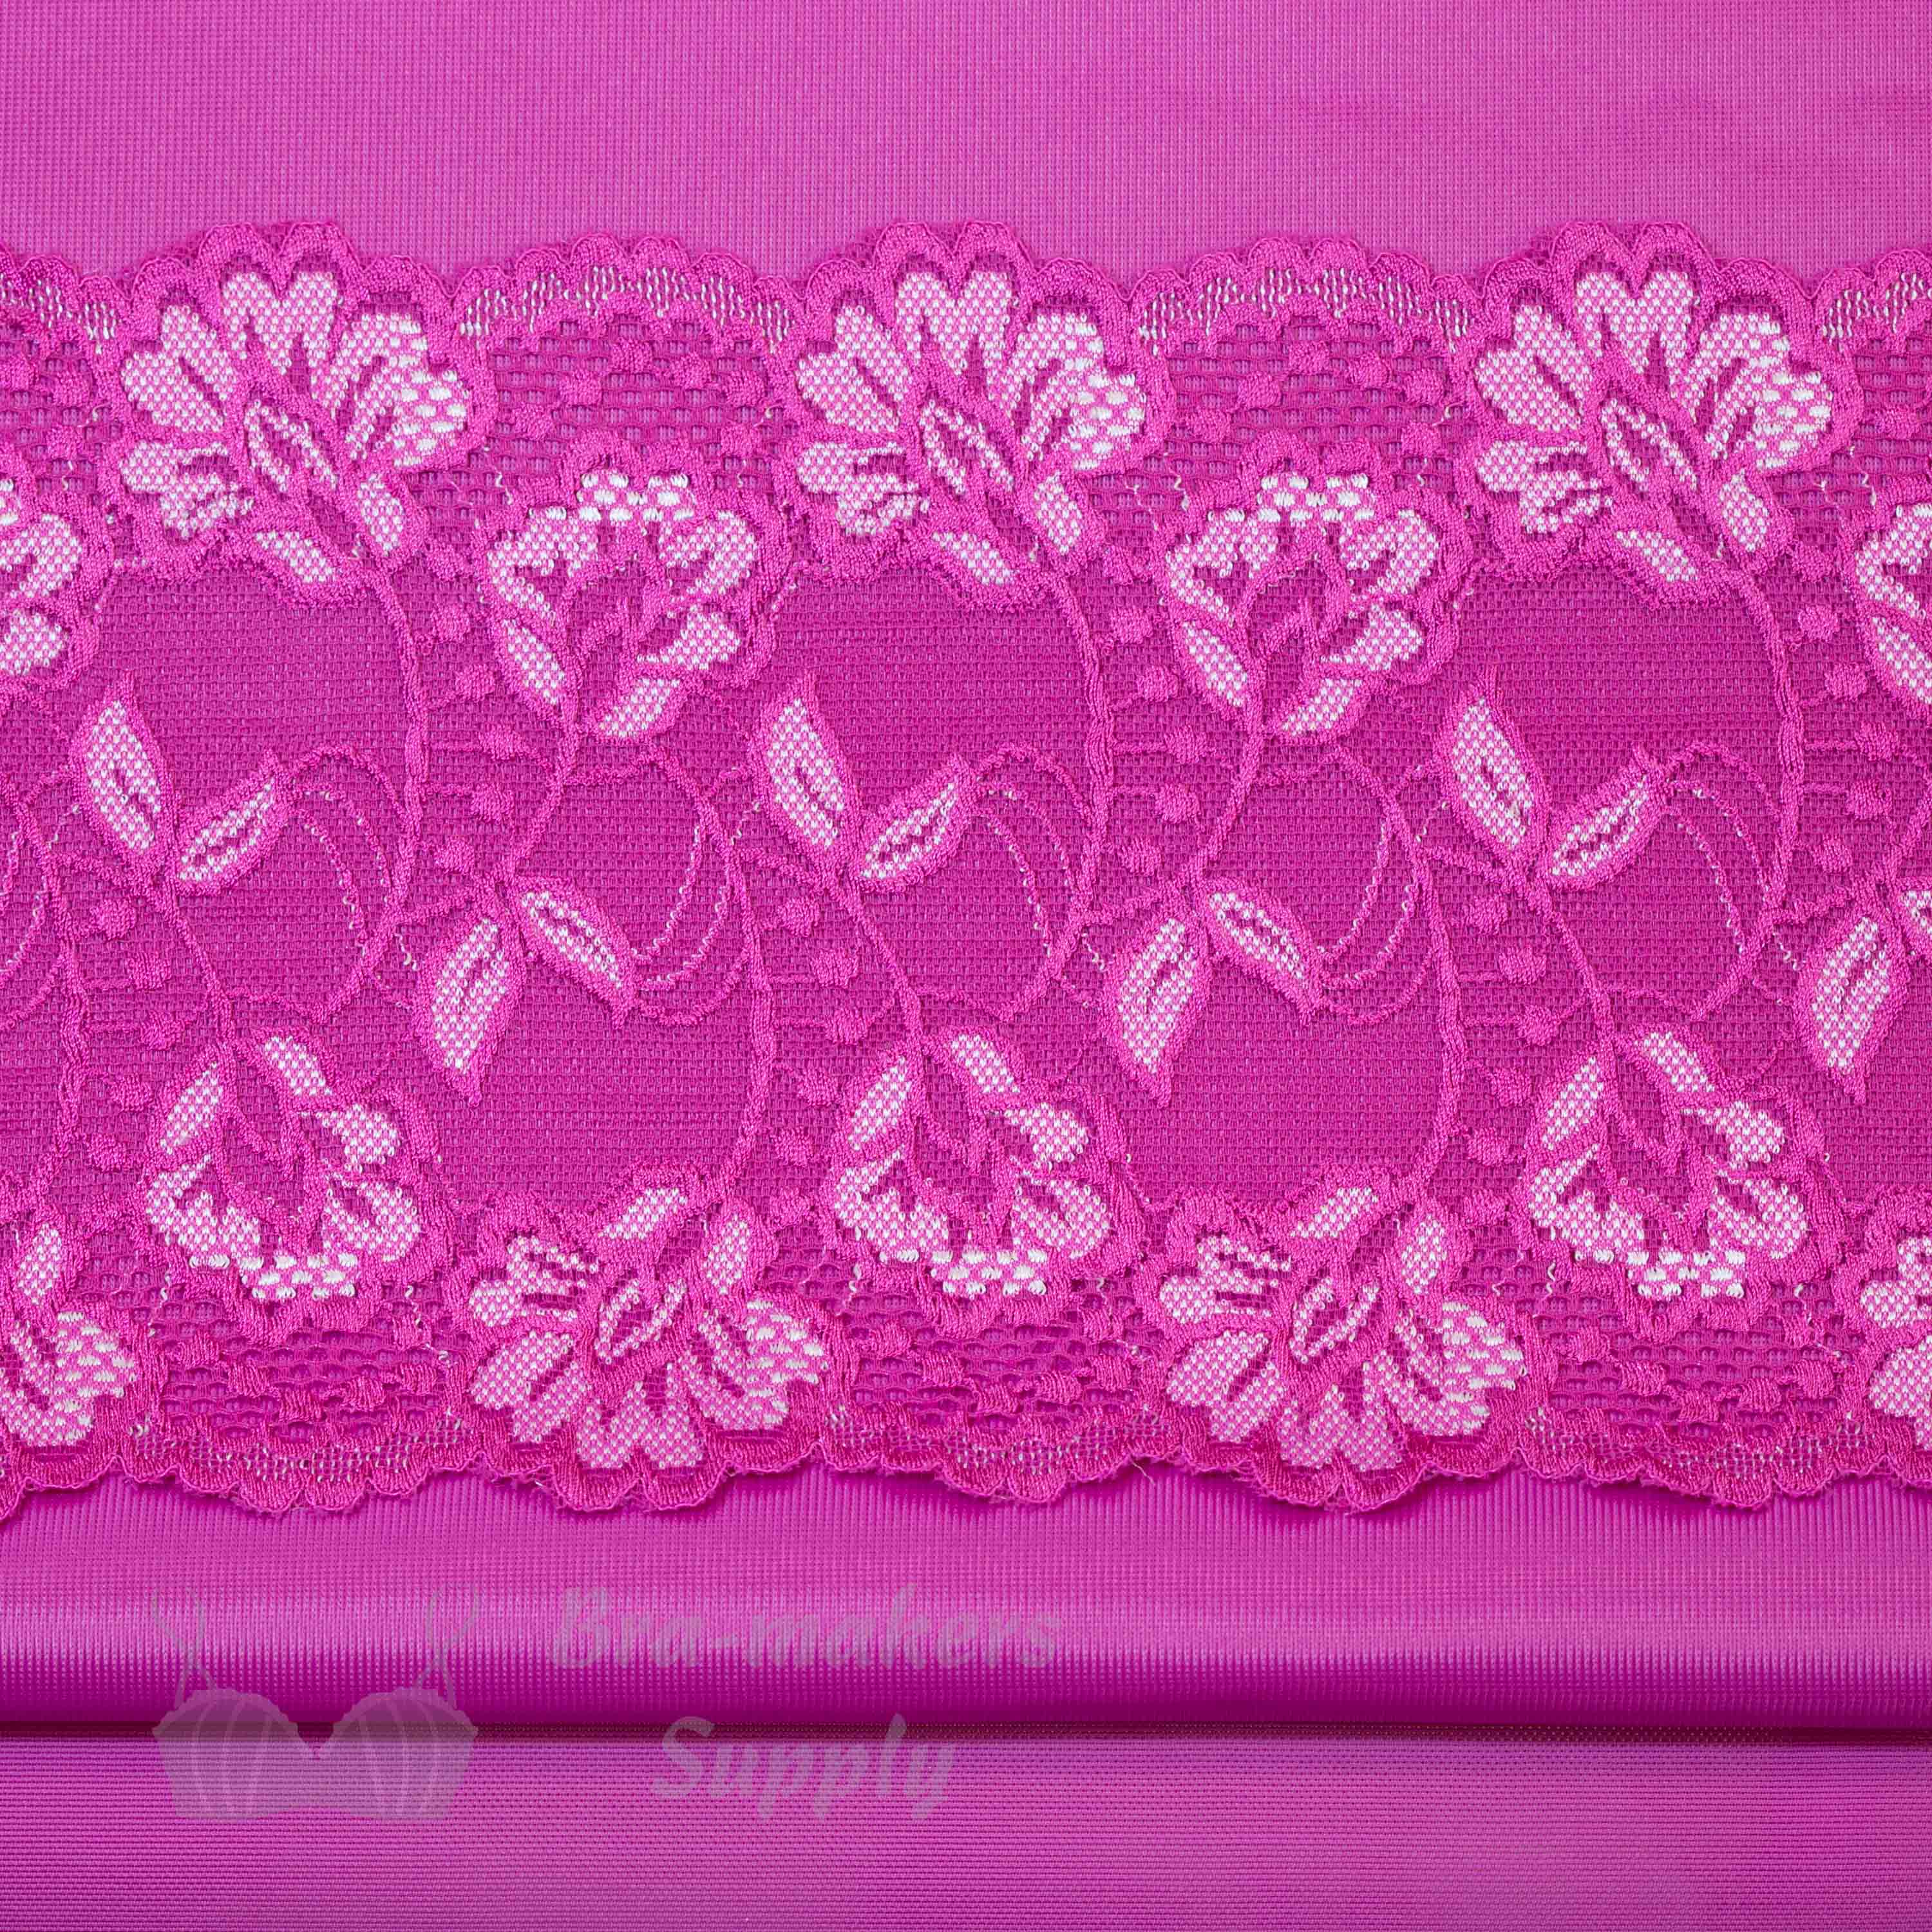 fuchsia trio bra fabrics pack with purple fuchsia flowers stretch lace KT-45-LS-45.4510 from Bra-Makers Supply